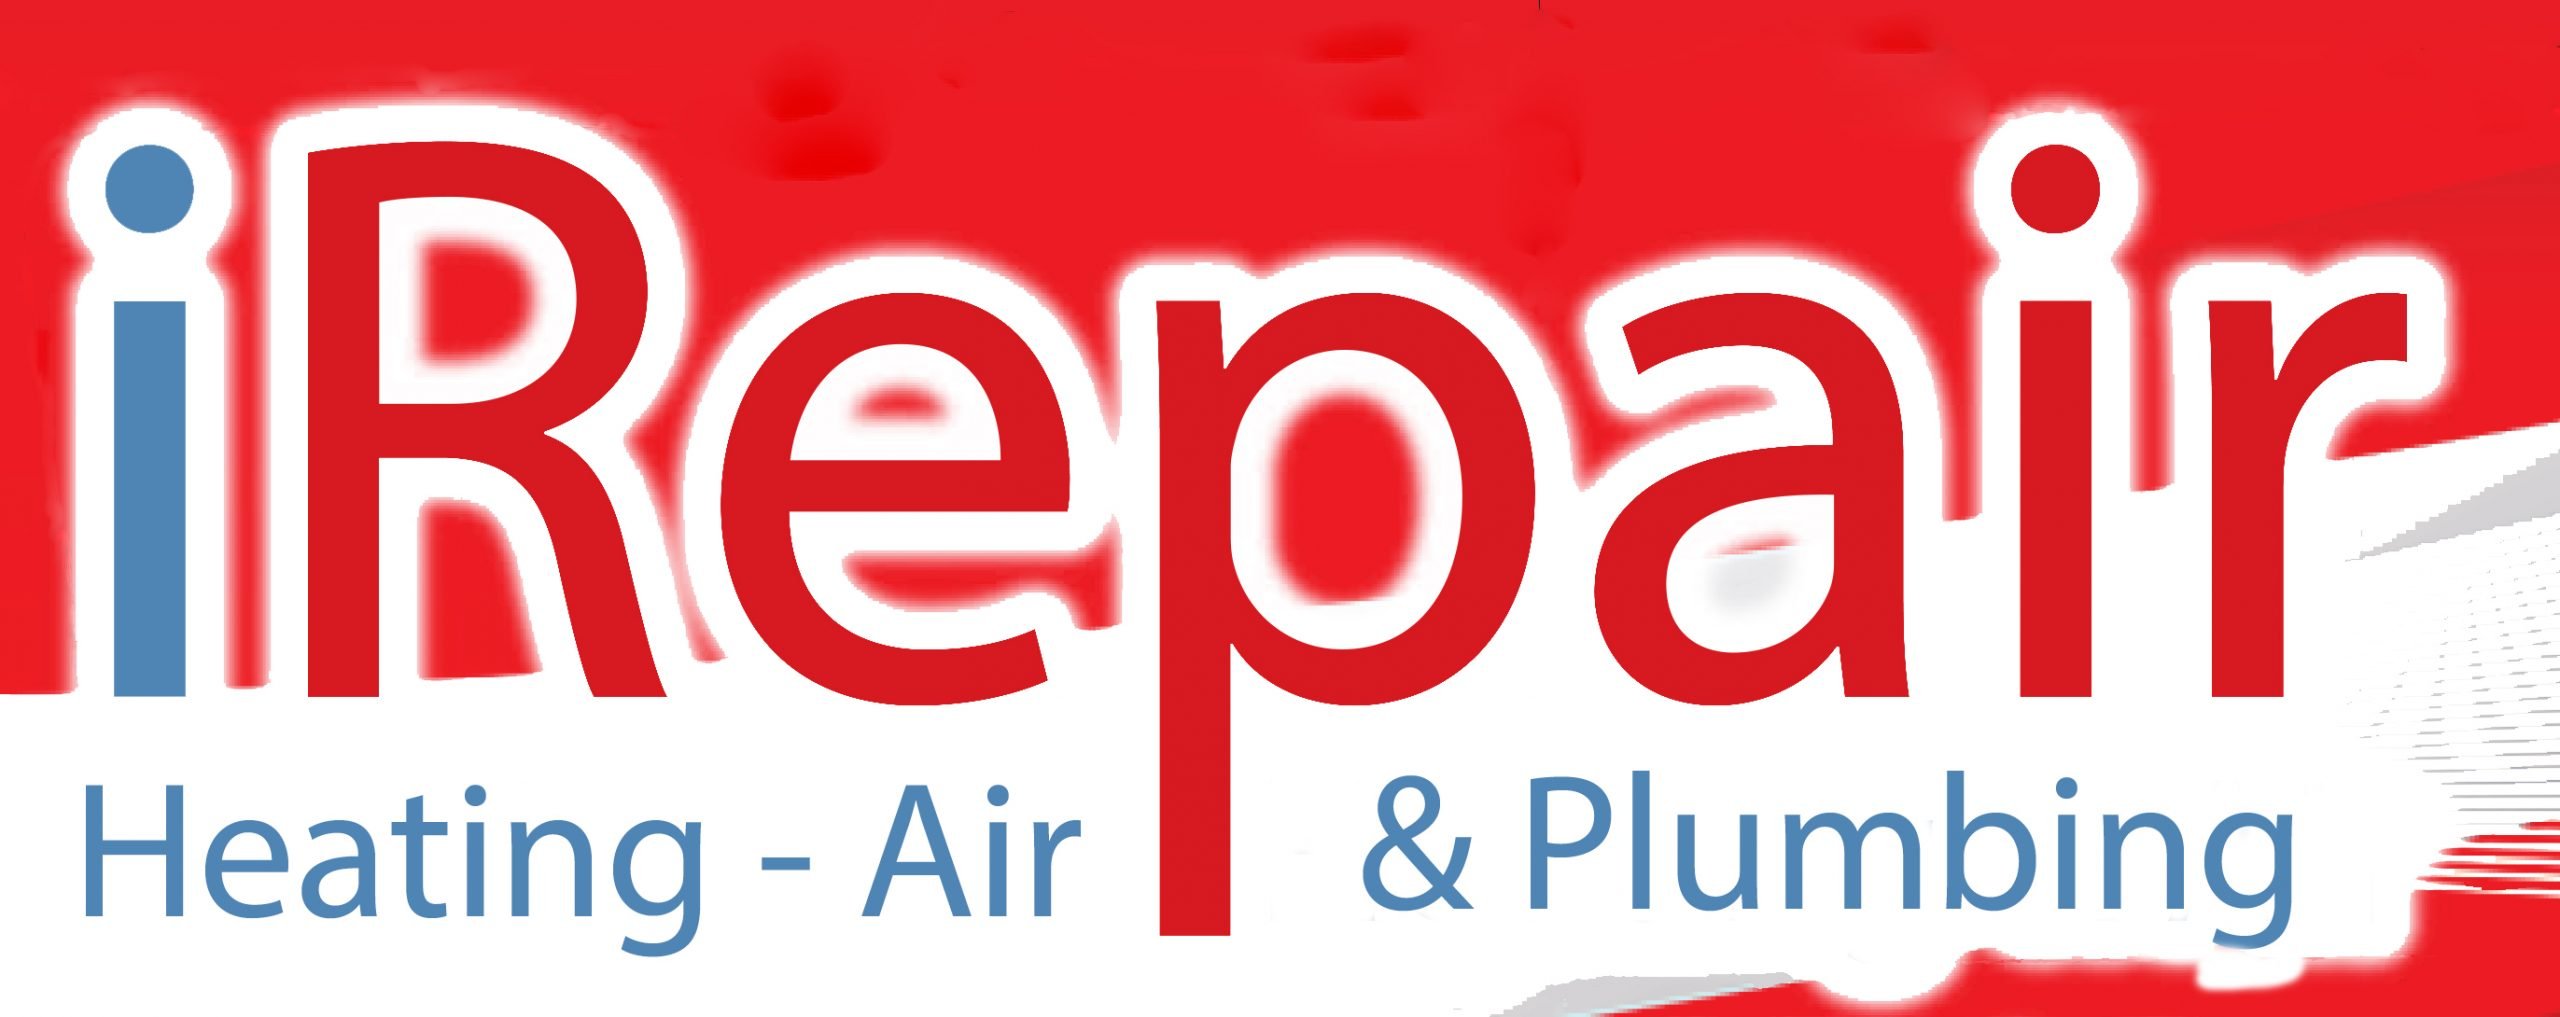 irepair heating, air and plumbing